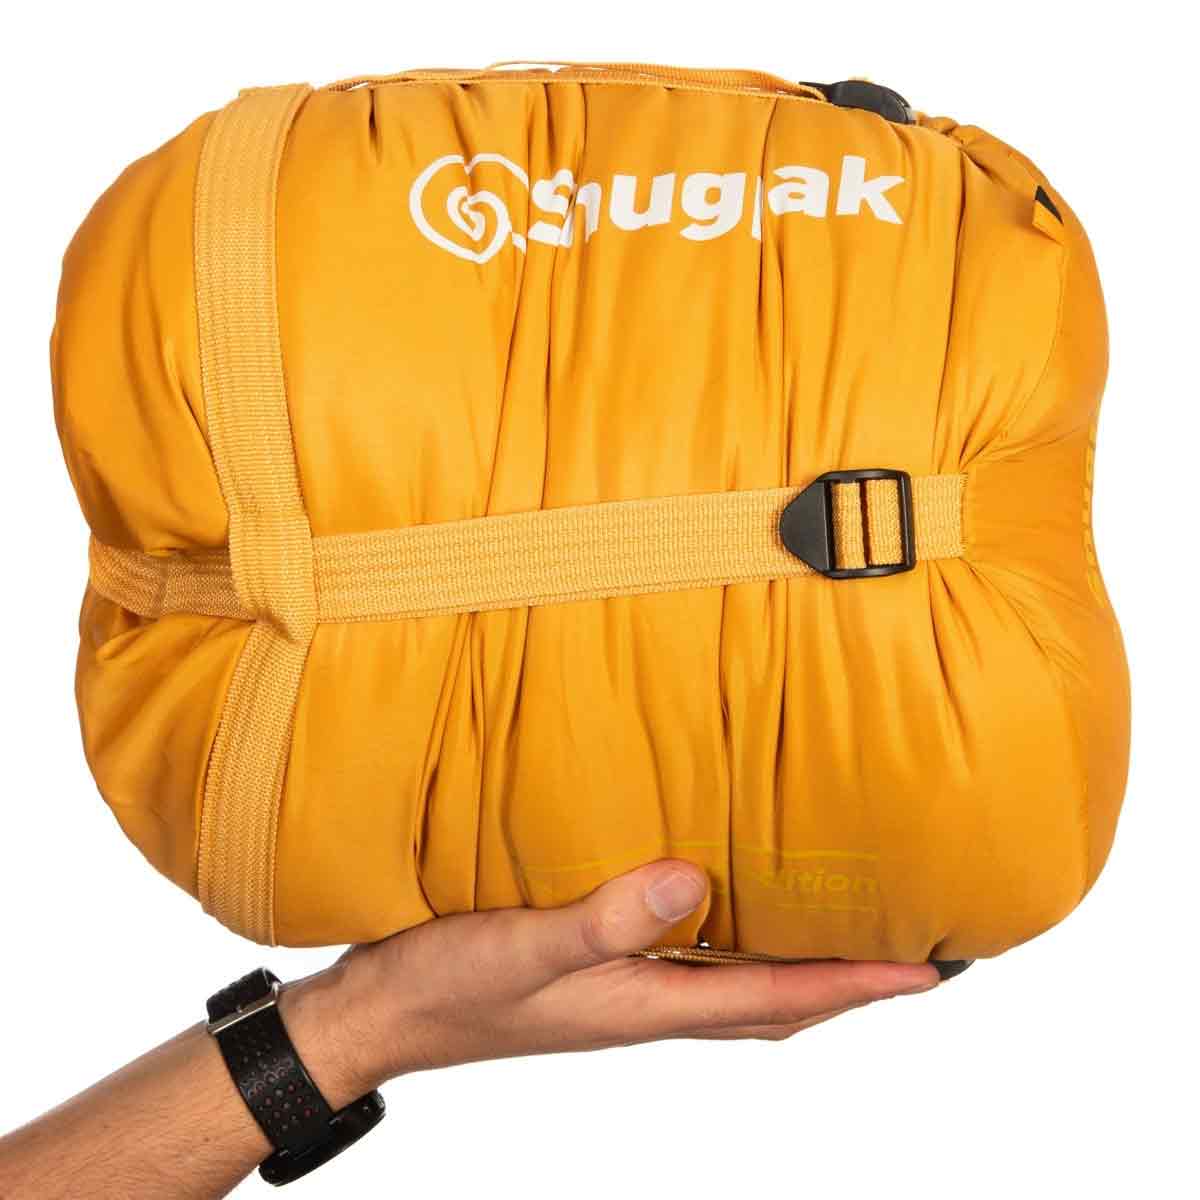 Snugpak Sleeper Expedition Sleeping Bag - John Bull Clothing